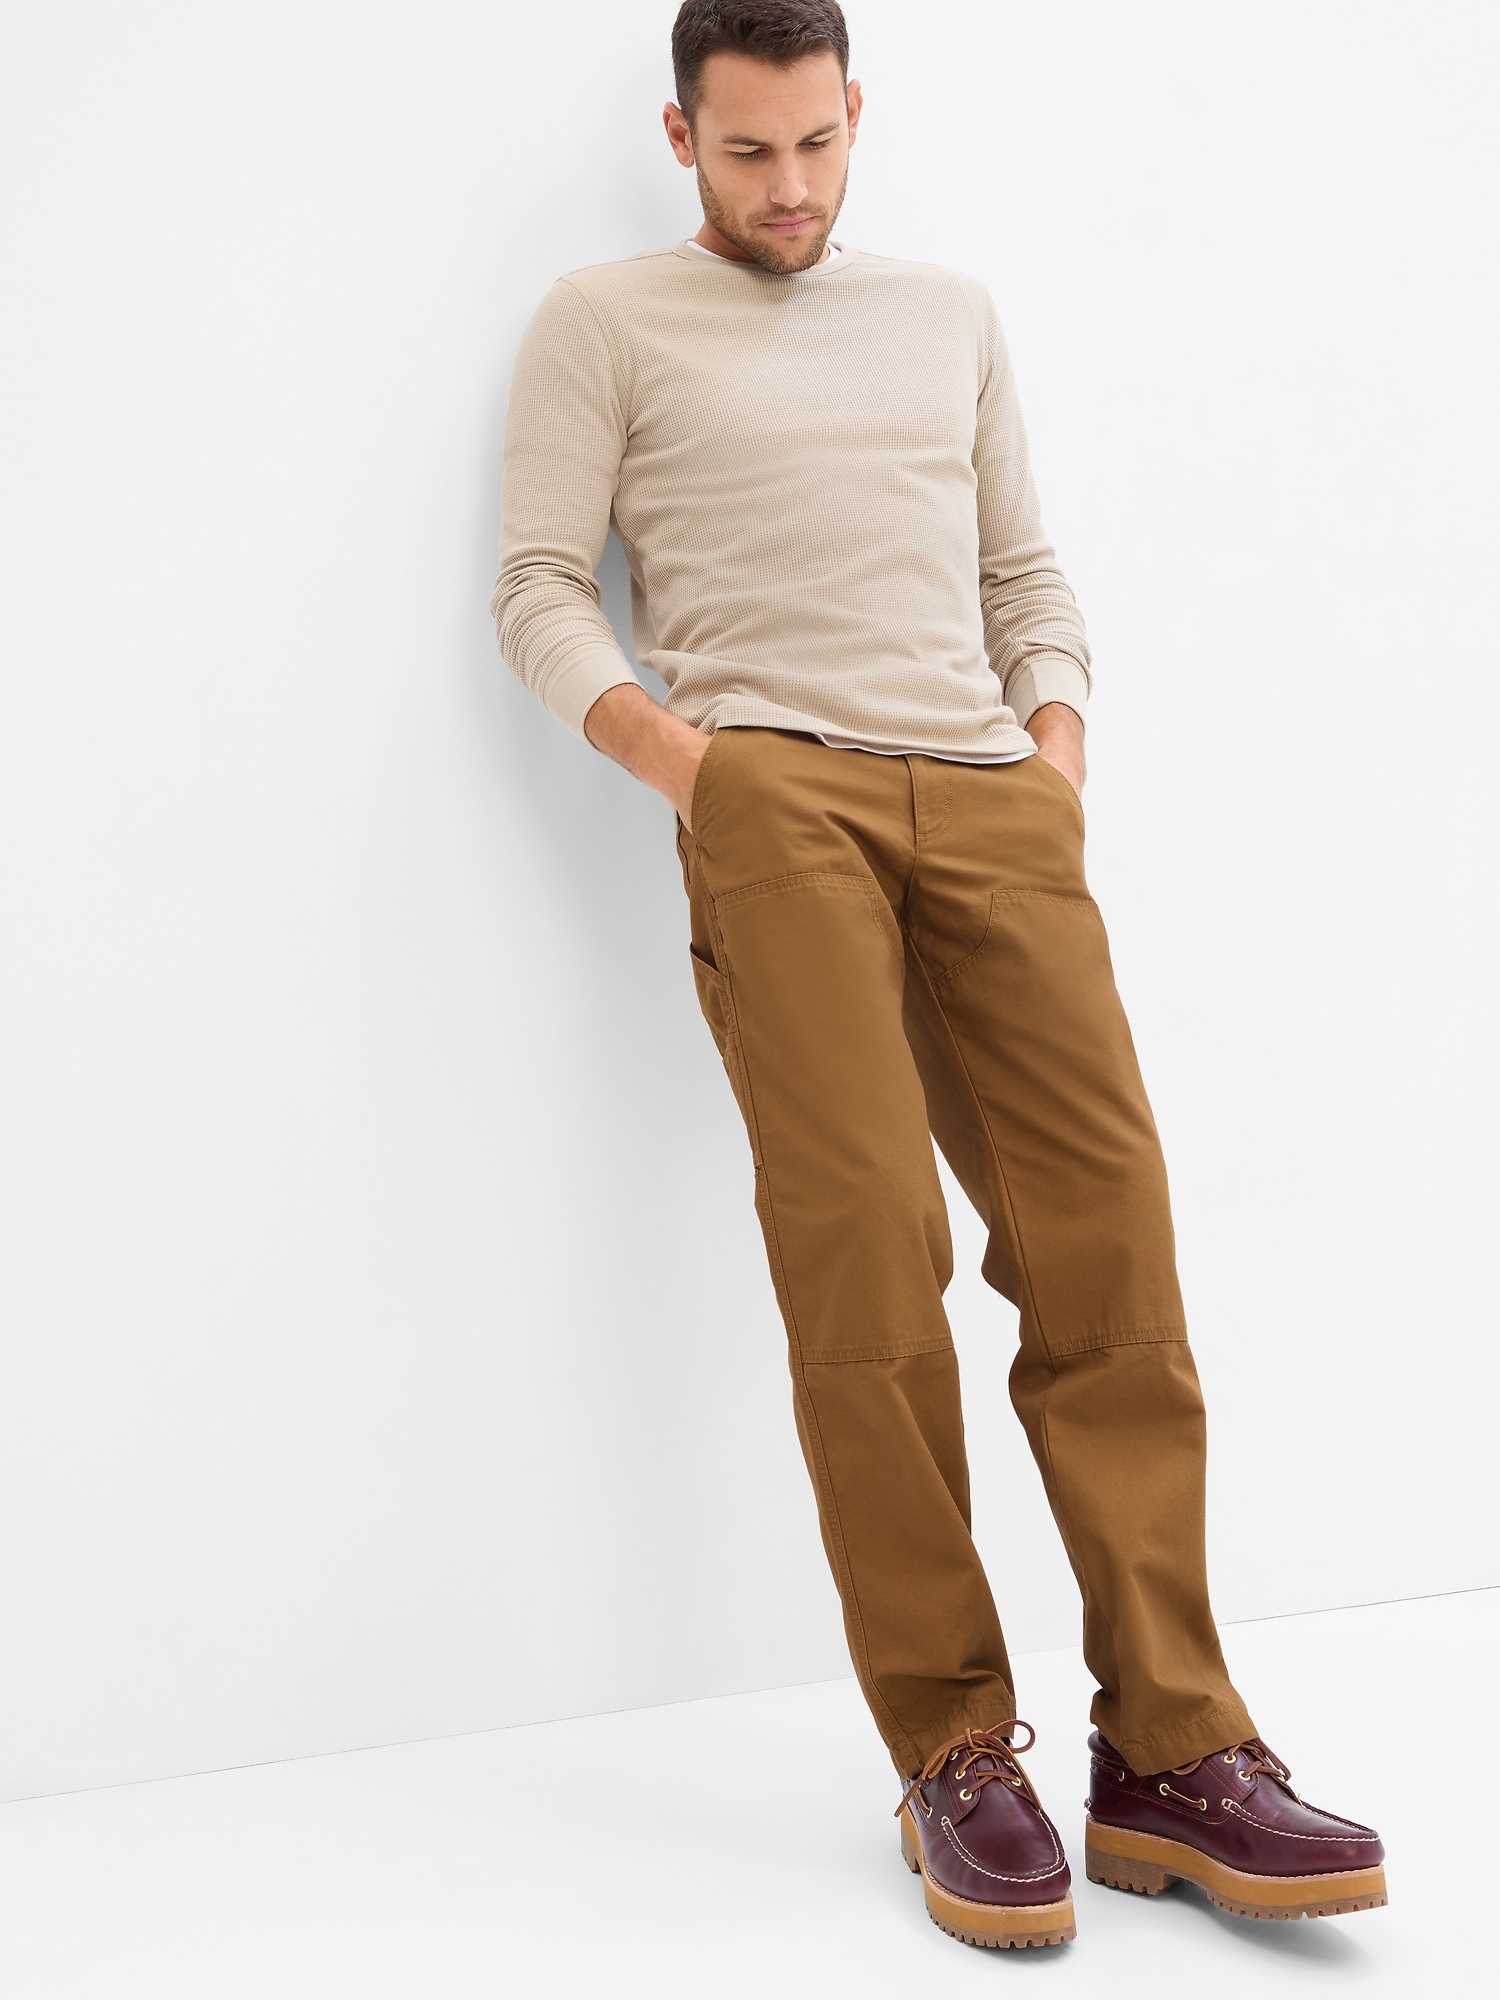 Gap Factory Men's Carpenter Pants with Washwell (various sizes in palomino brown)